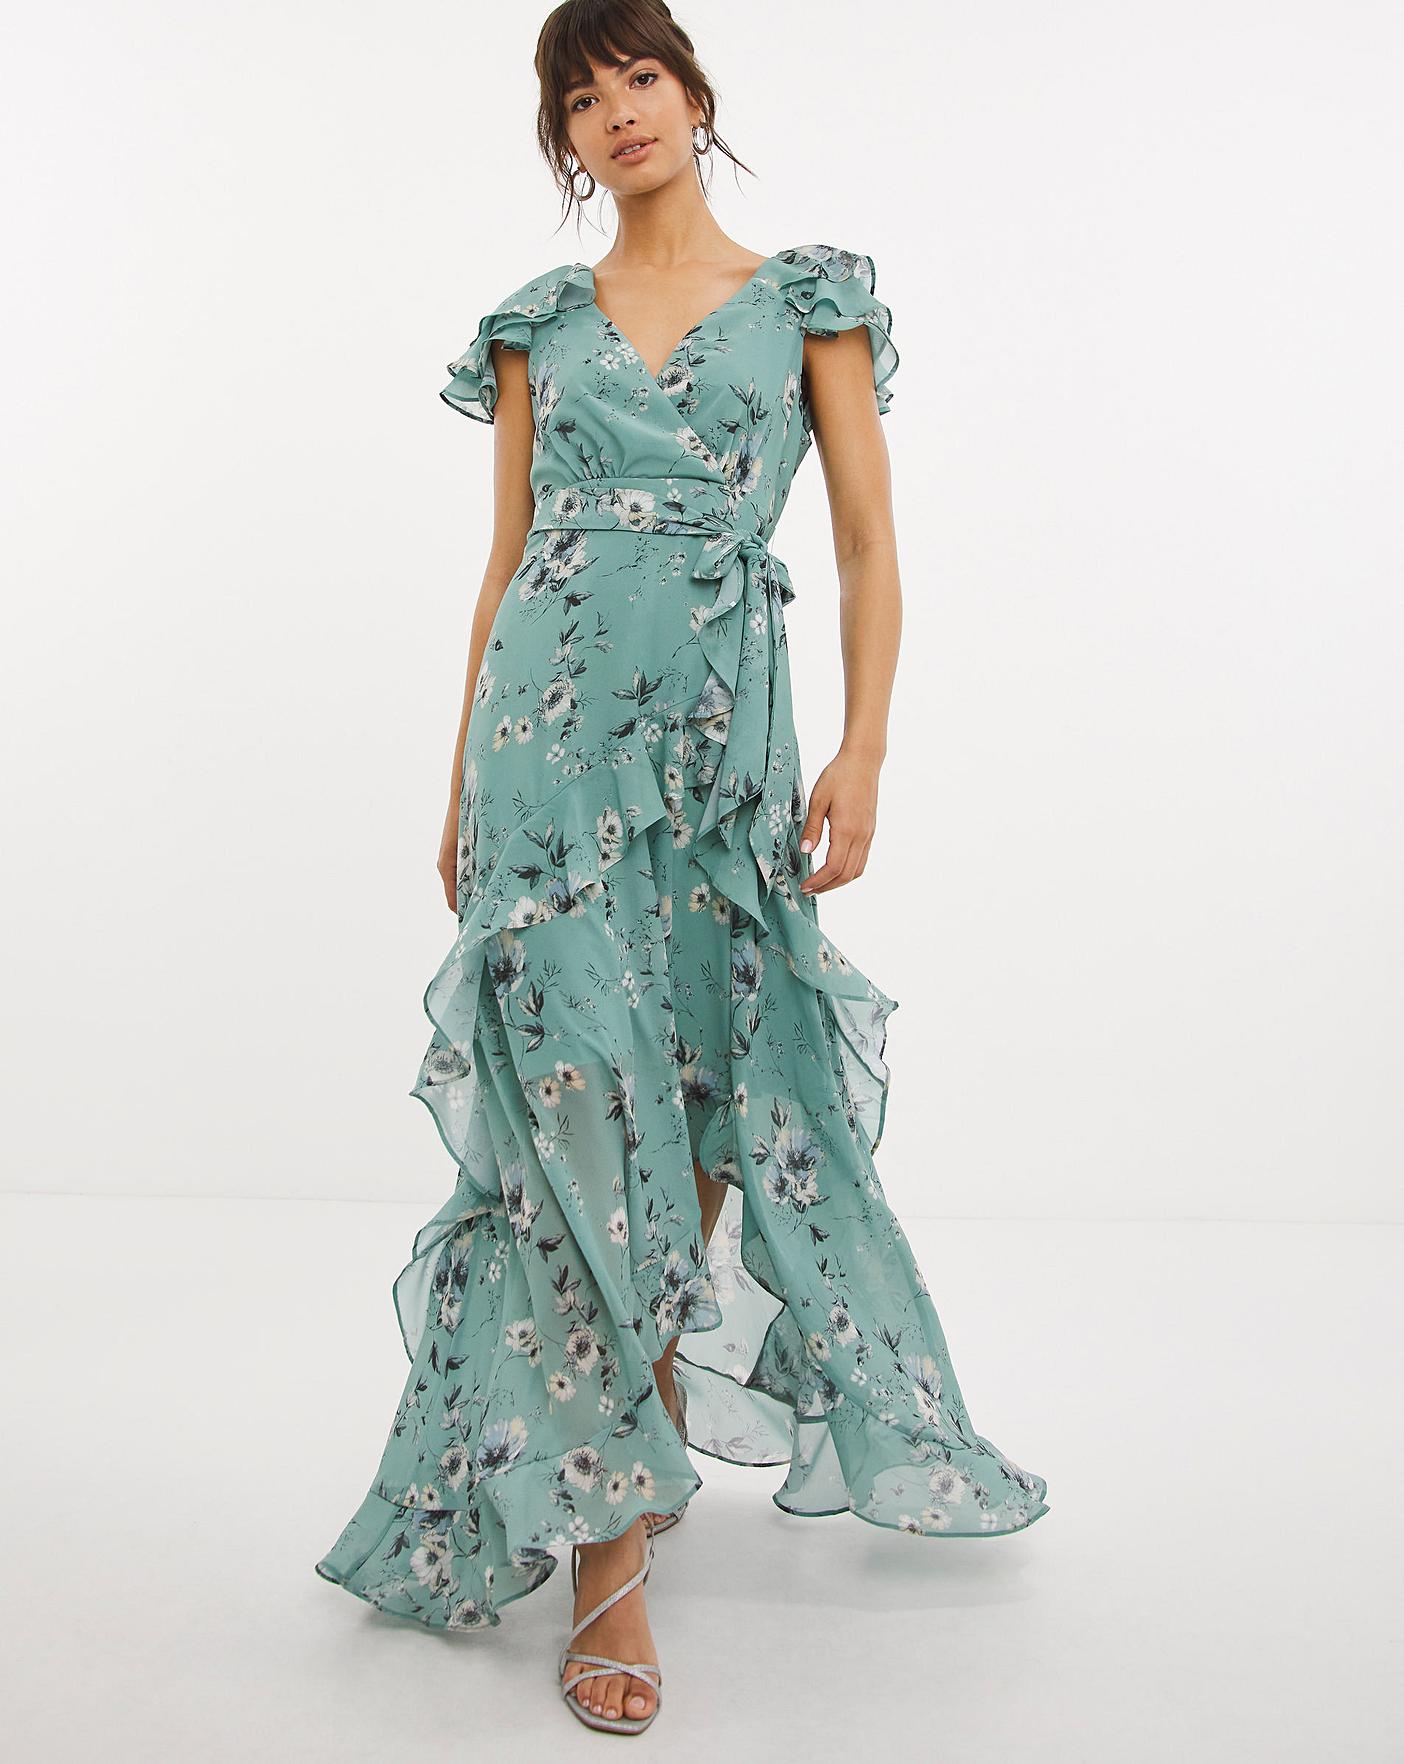 Joanna Hope Ruffle Maxi Dress, £70.00